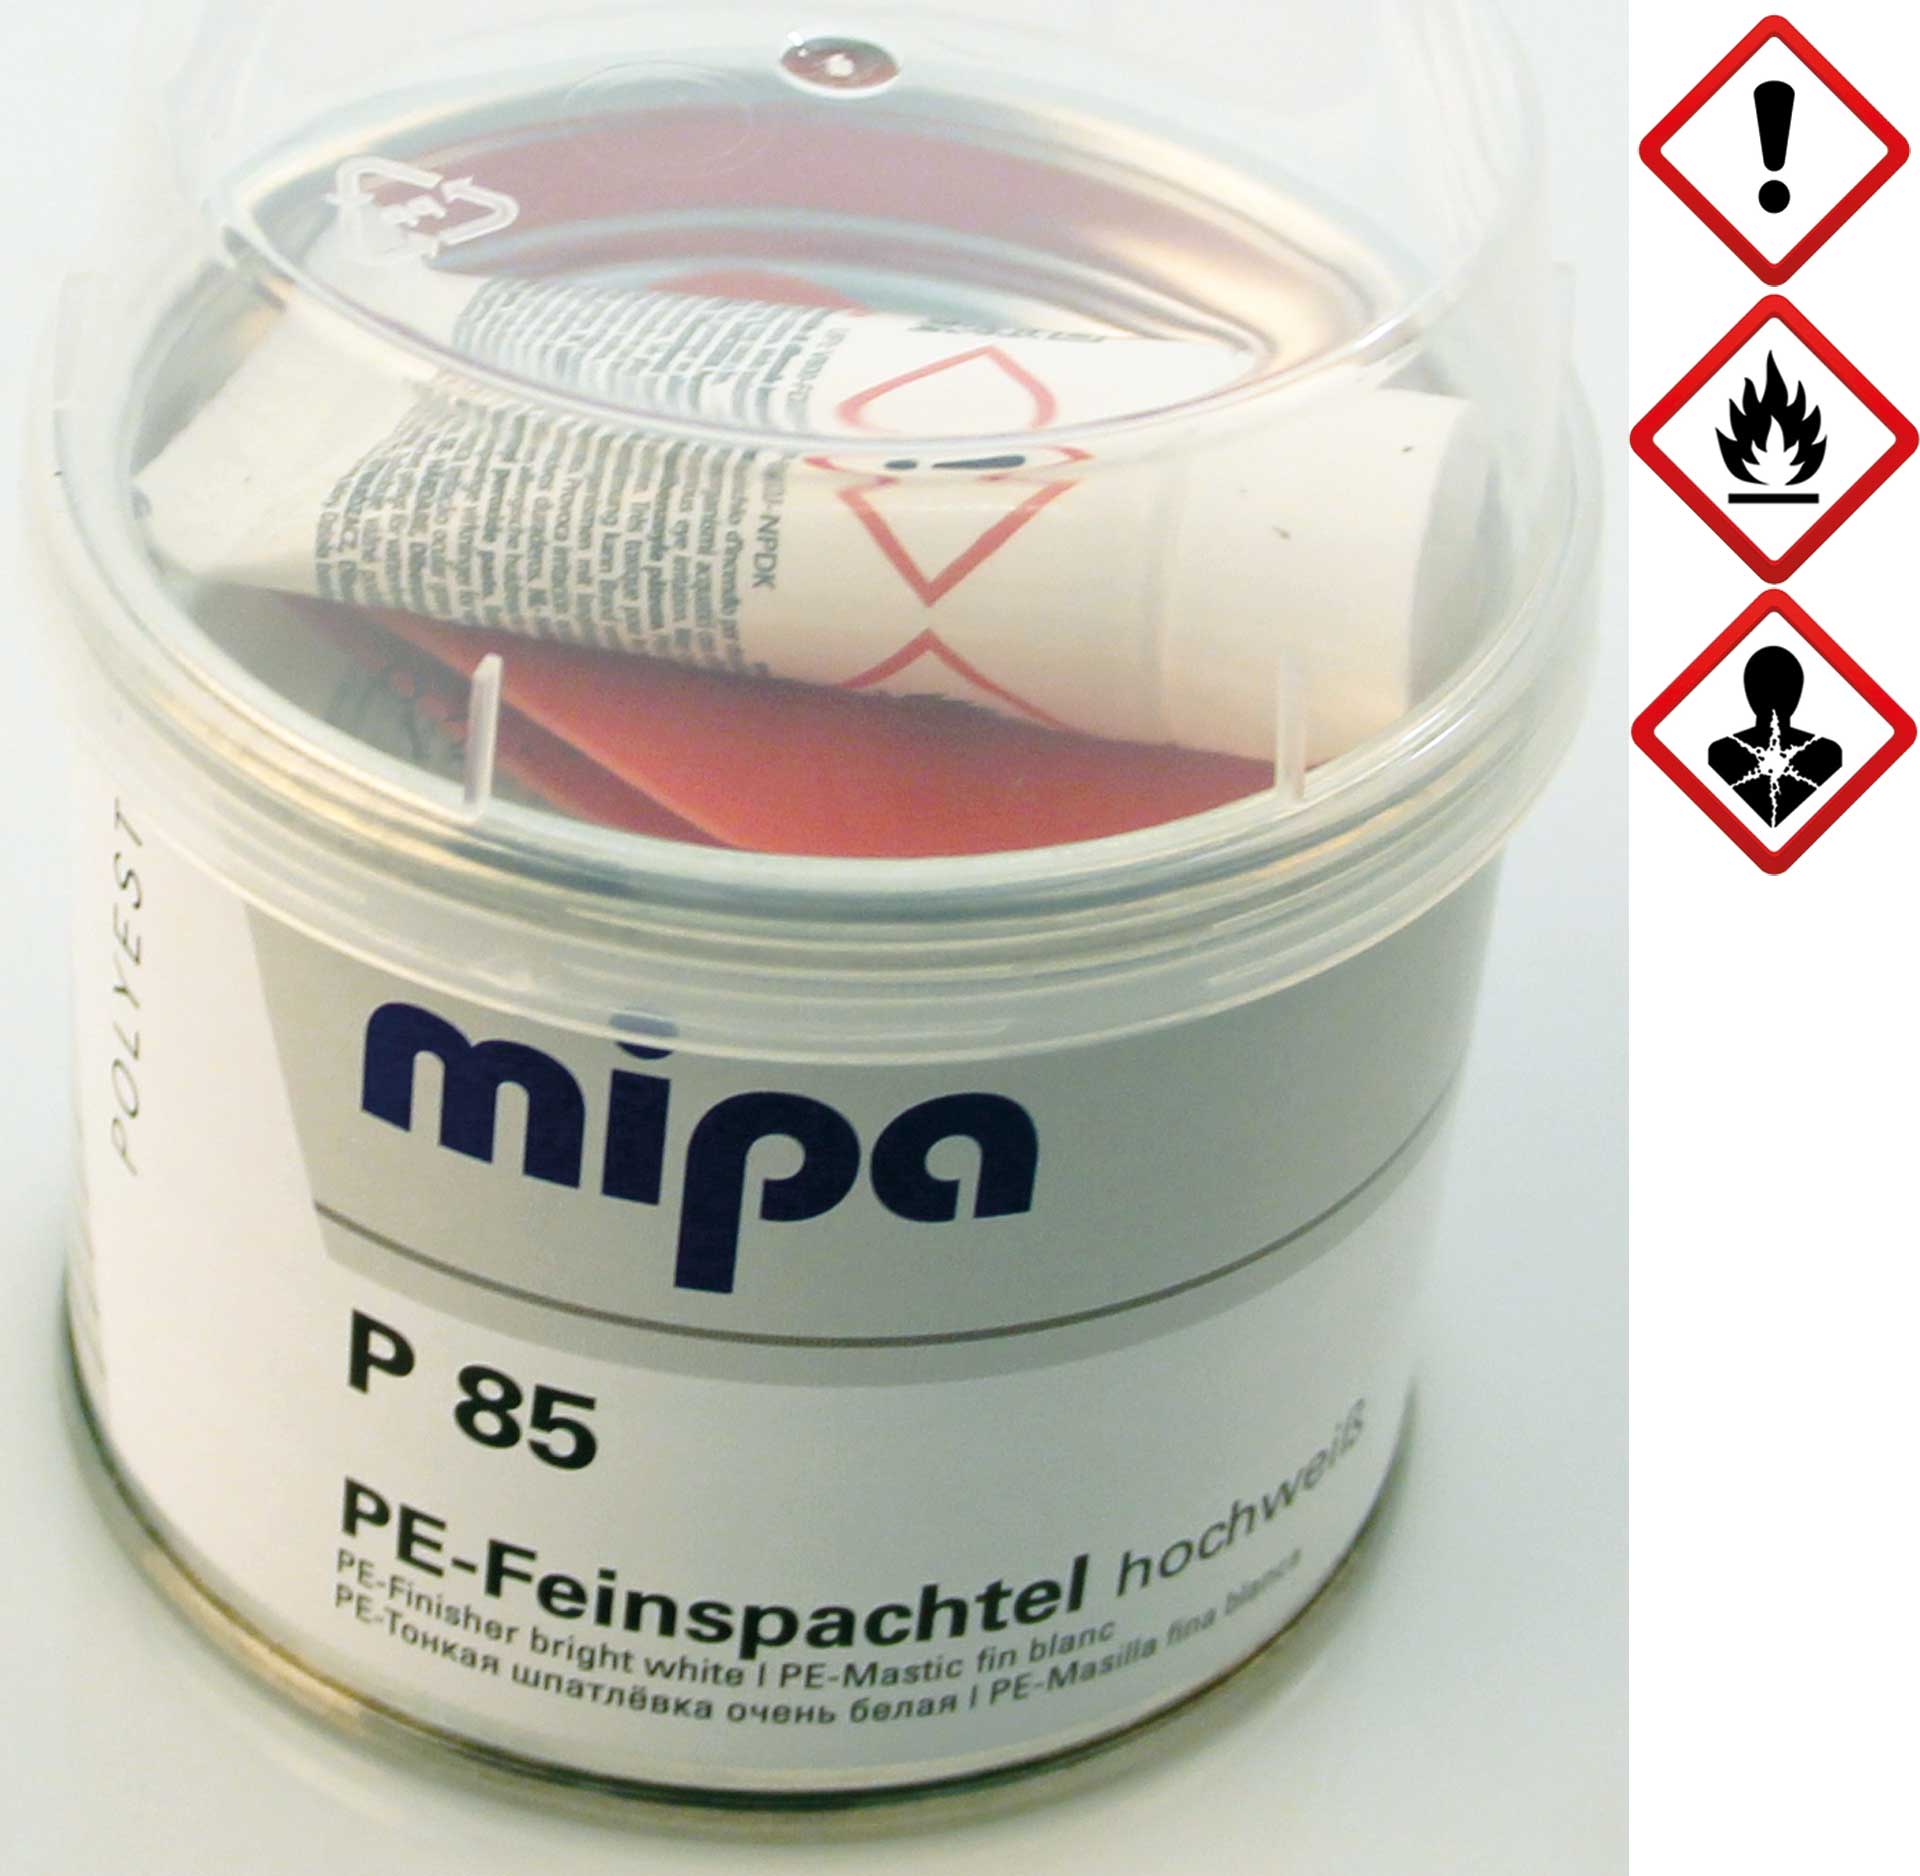 mipa P 85 PE-Feinspachtel 250g inkl. Härter